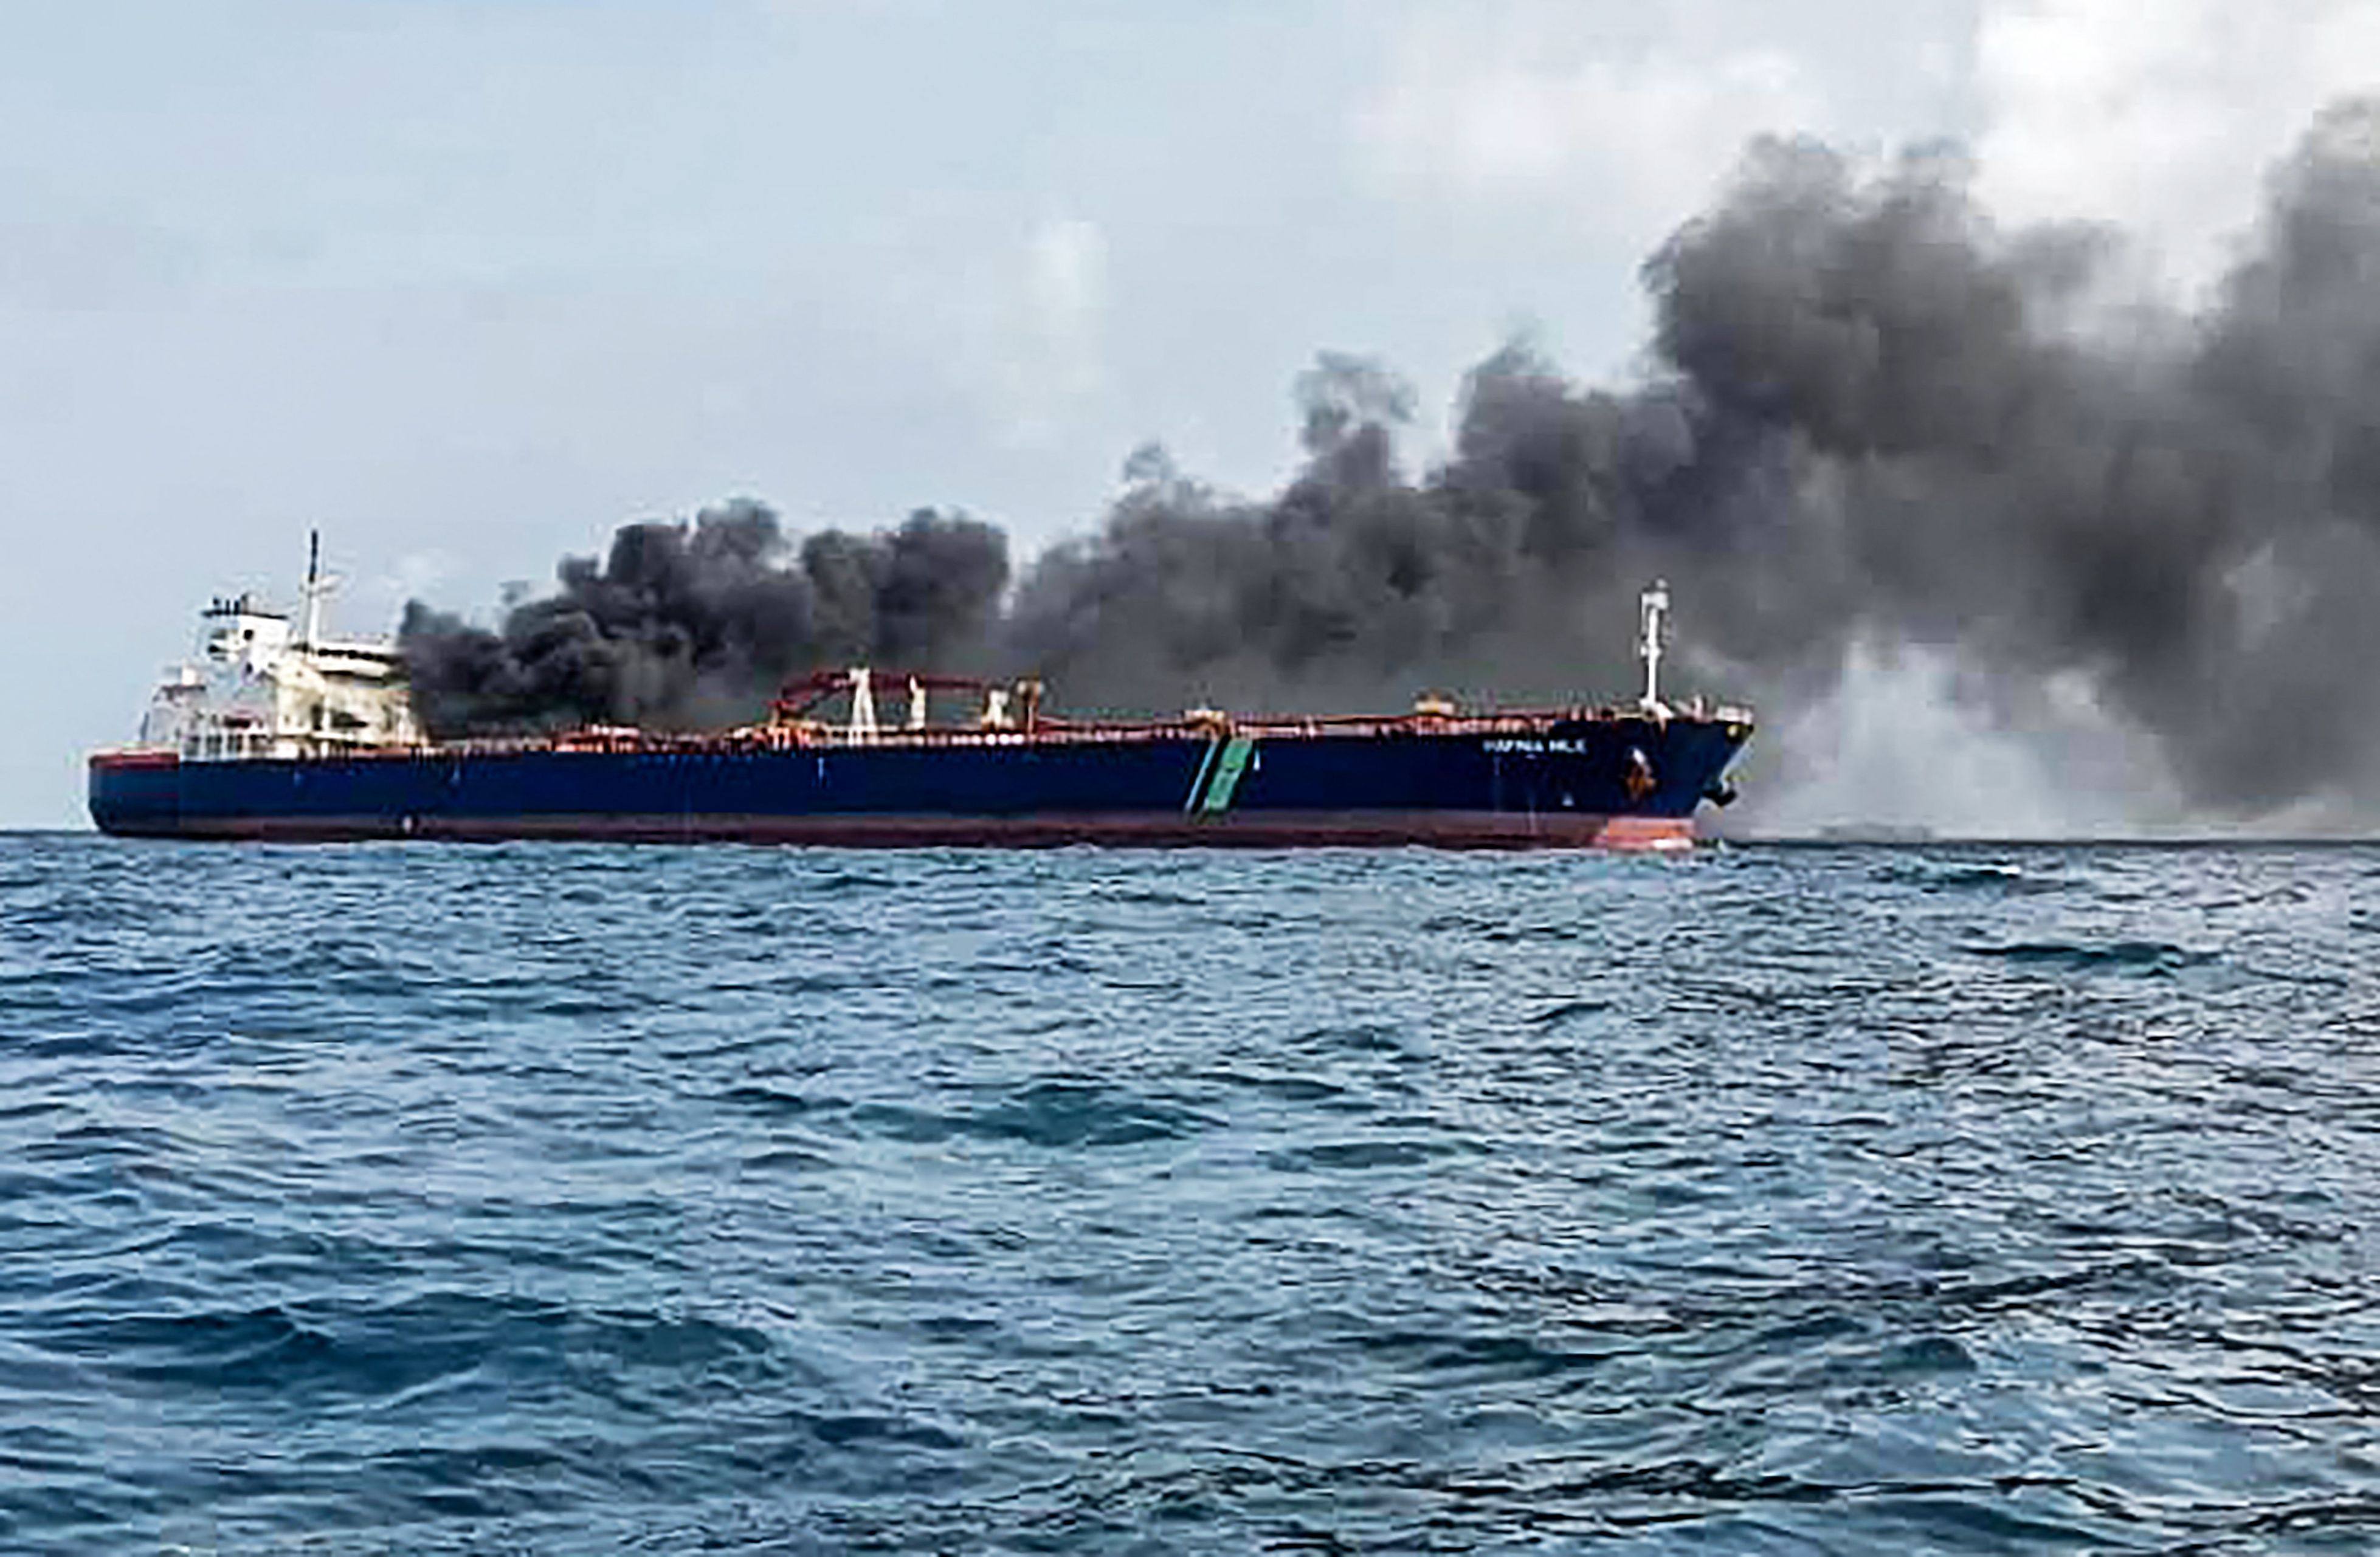 The Singapore-flagged tanker Hafnia Nile on fire in Tanjung Sedili, near Singapore. Photo: Handout/Malaysian Maritime Enforcement Agency/AFP